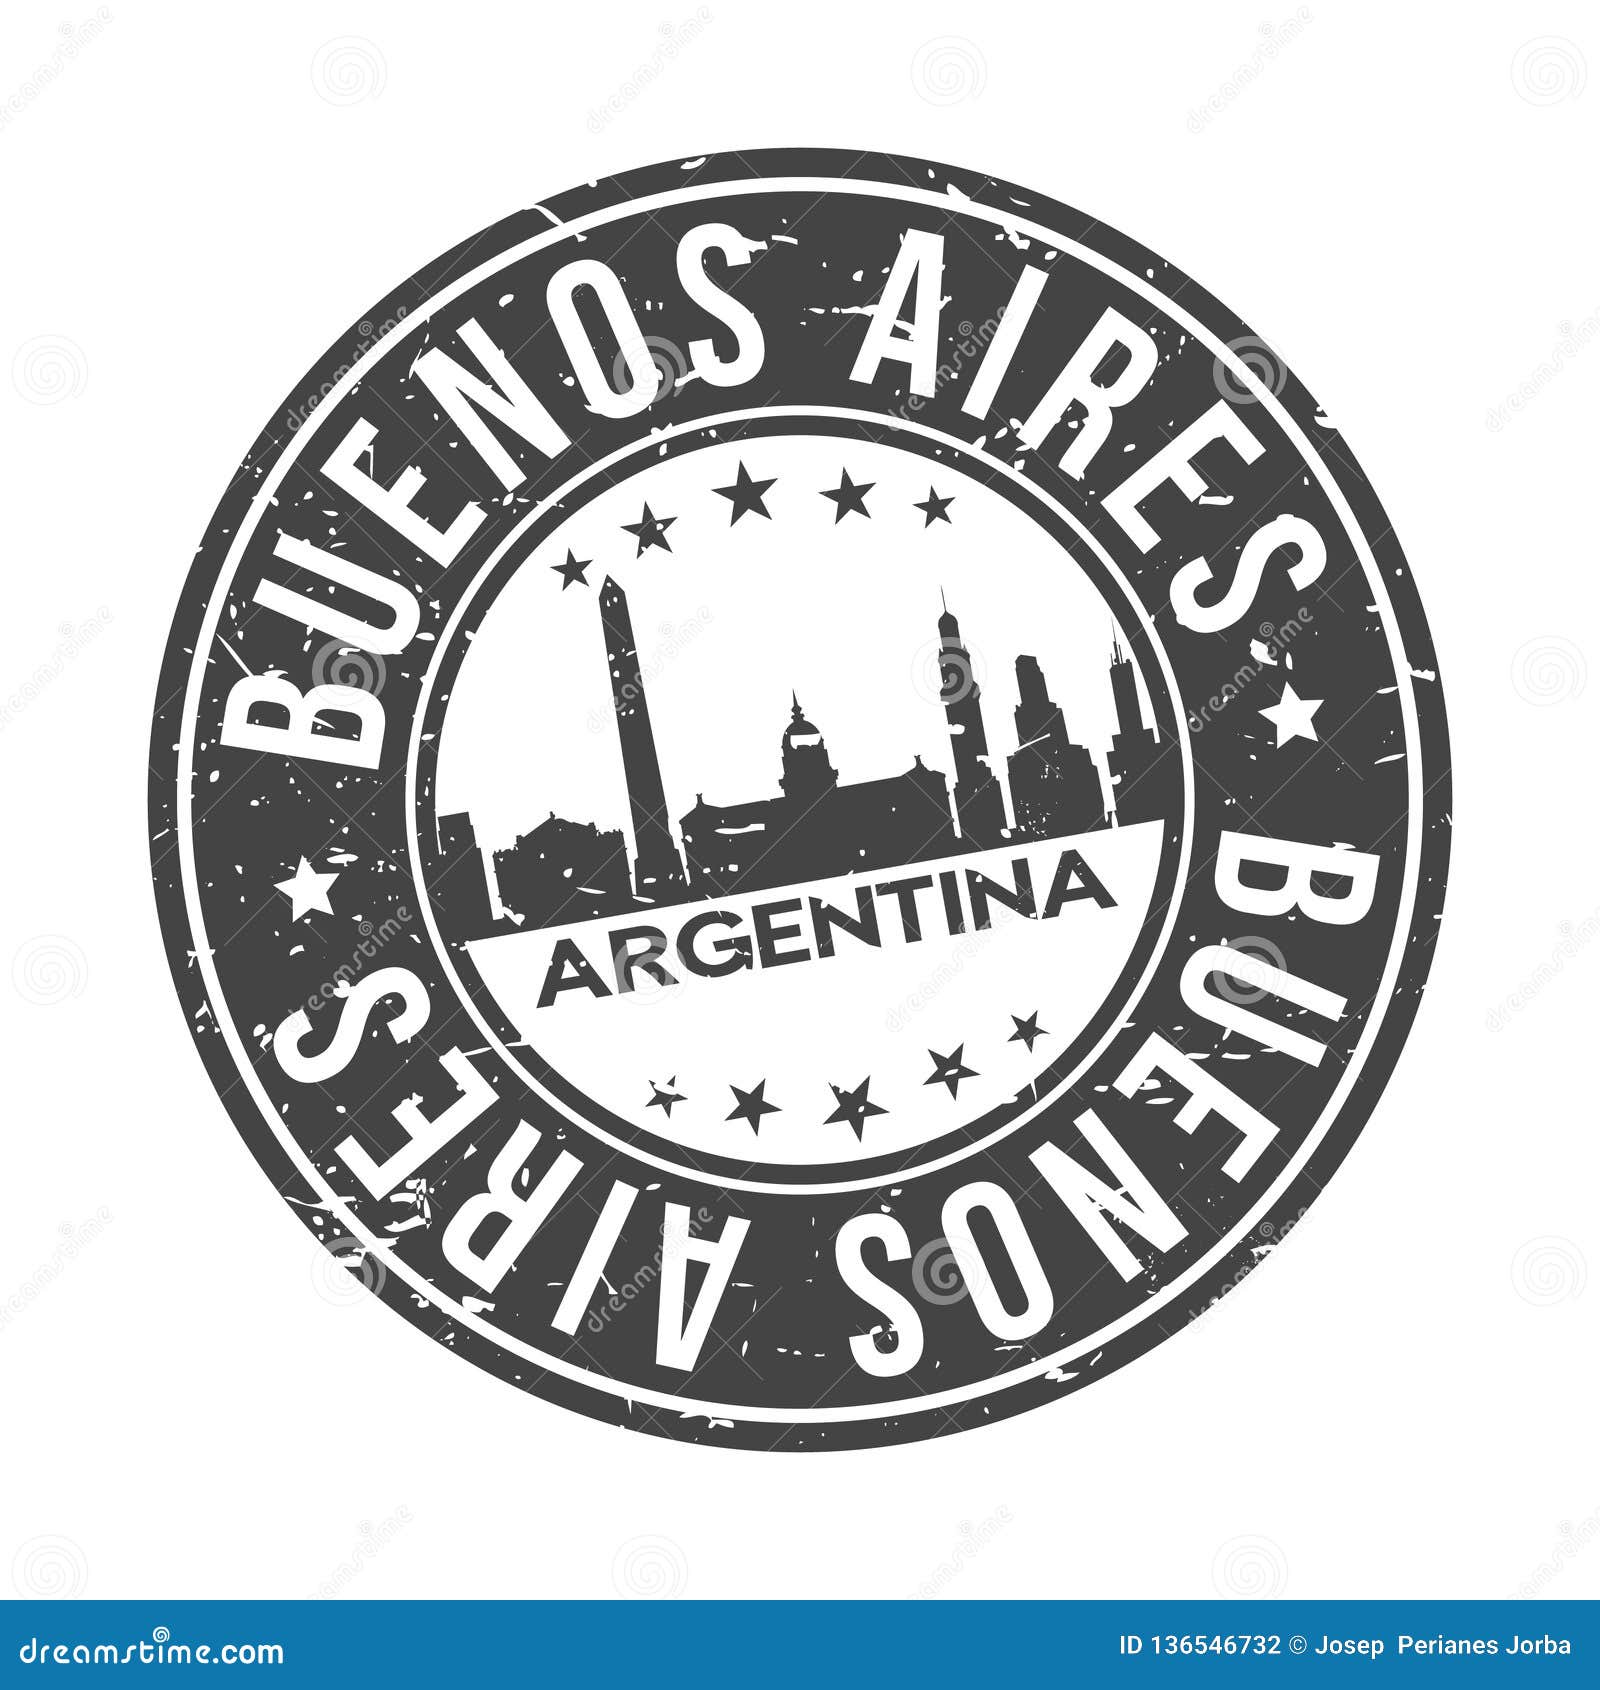 buenos aires argentina round button city skyline  stamp  travel tourism